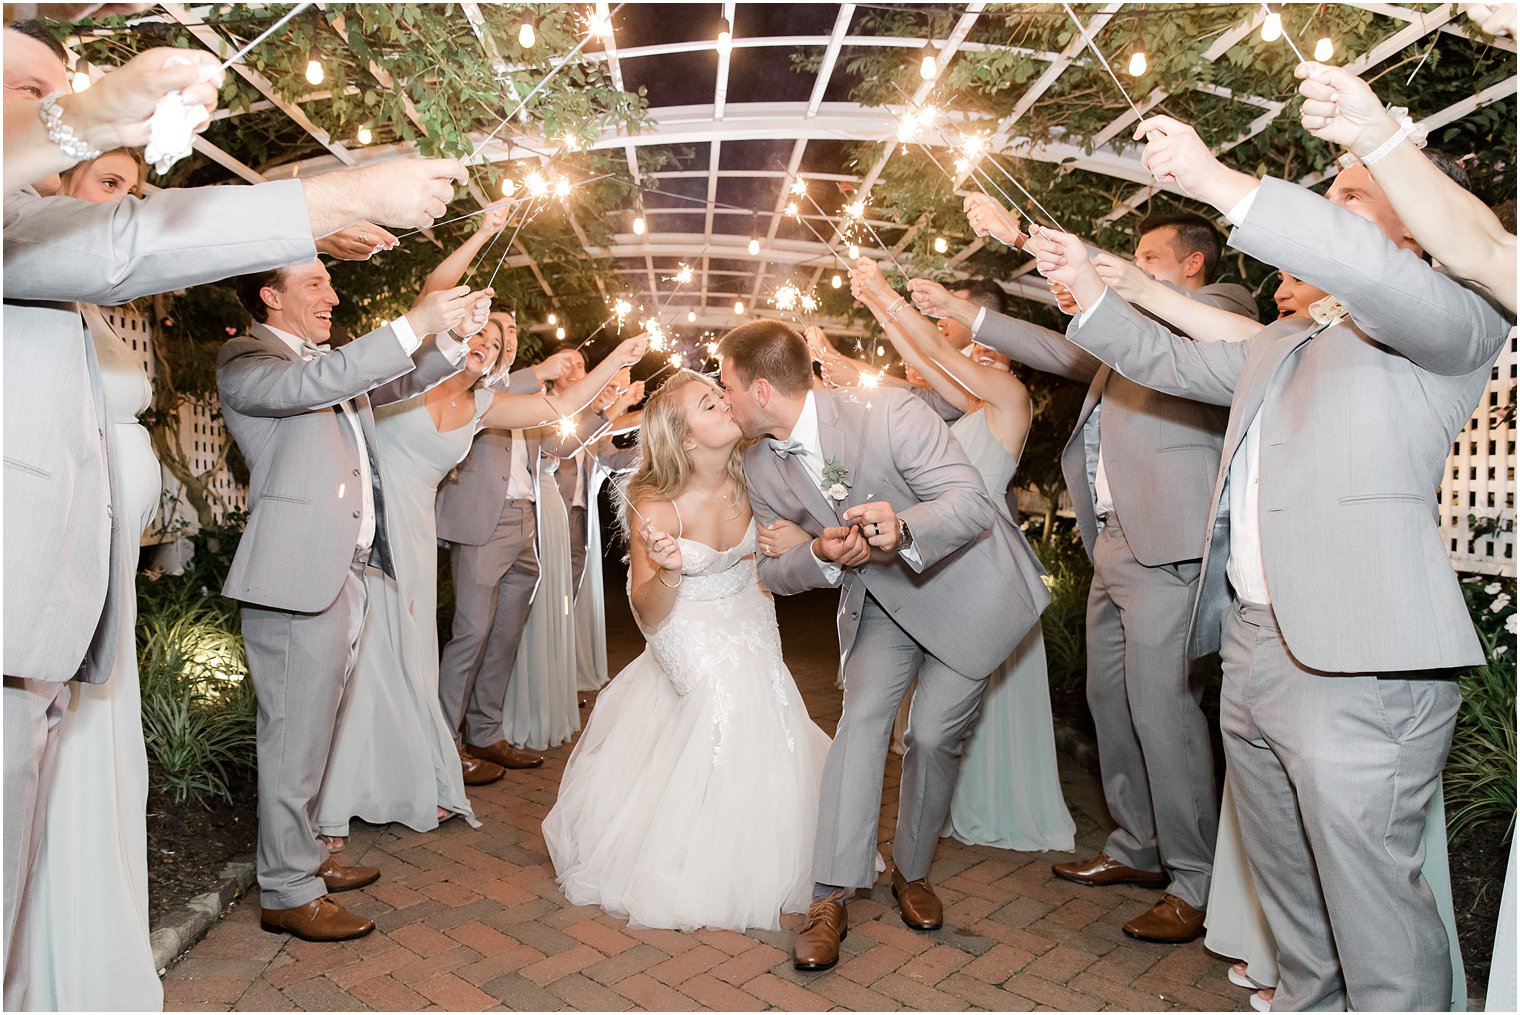 sparkler exit photo on wedding day